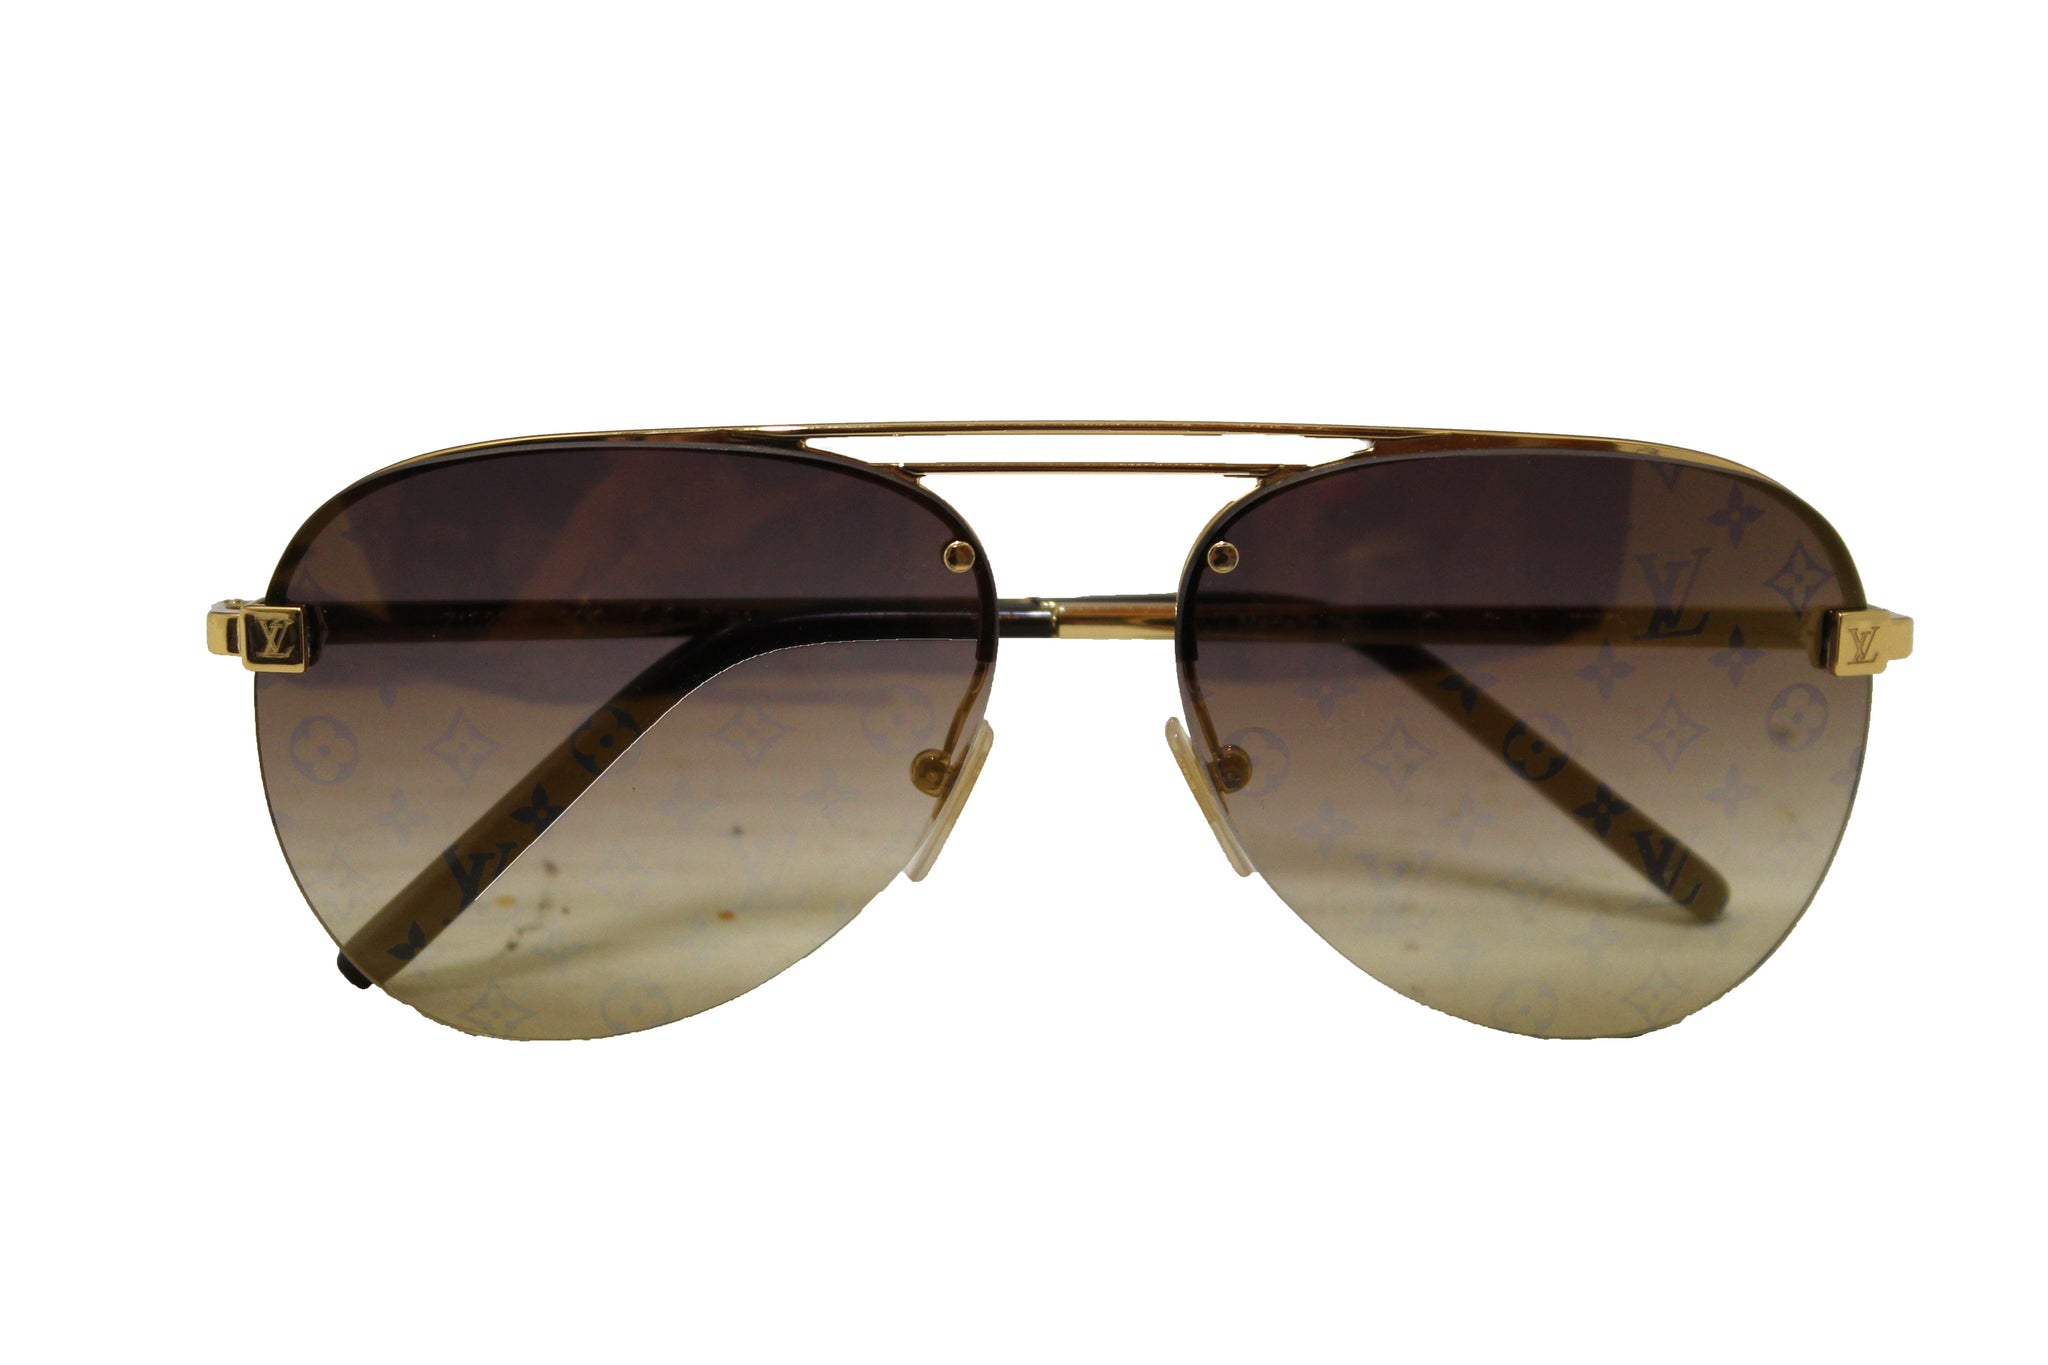 Louis Vuitton Silver Clockwise Monogram Sunglasses